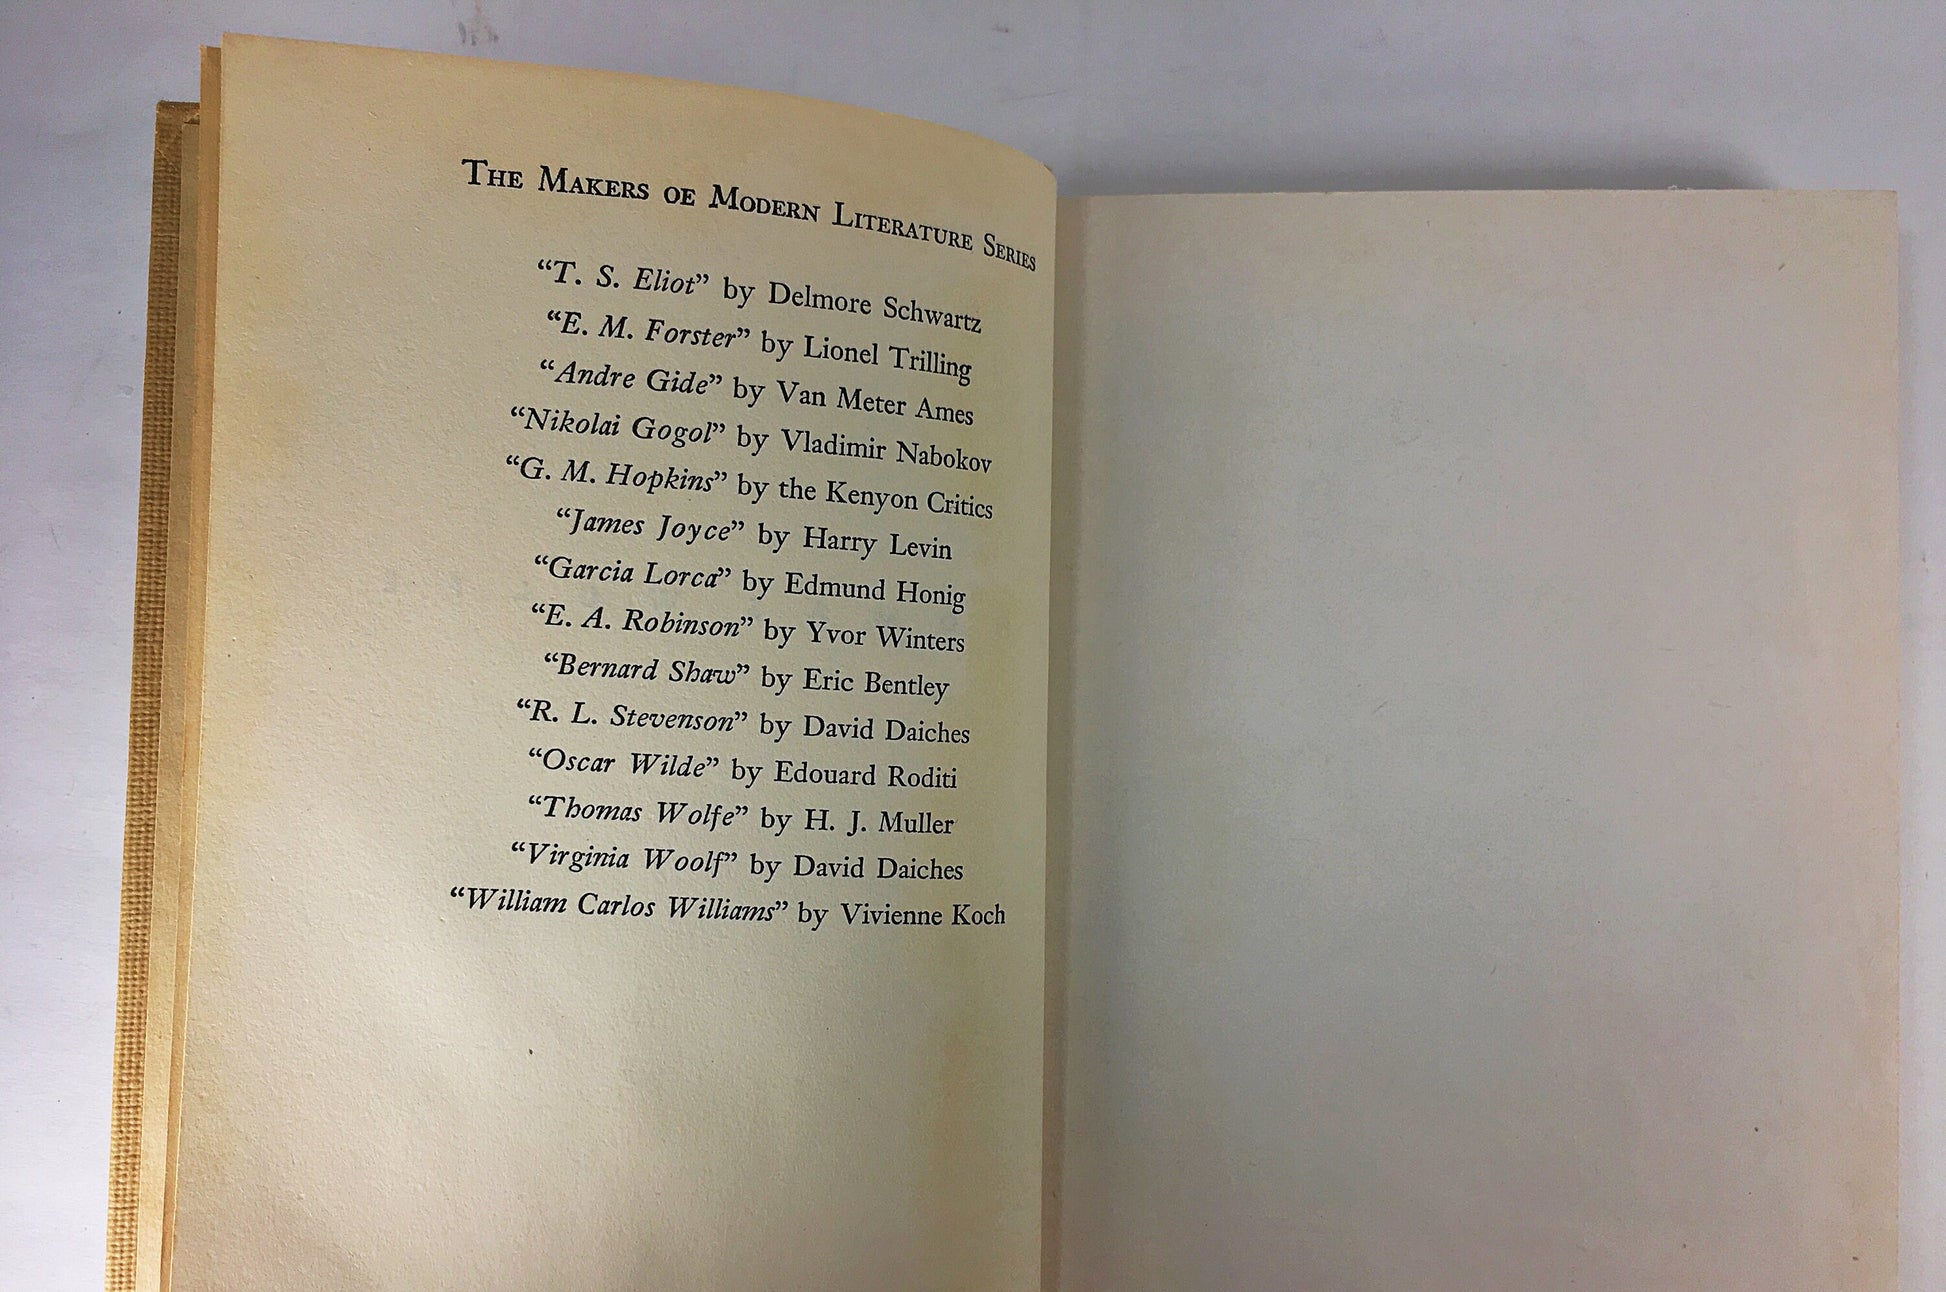 Thomas Wolfe by Herbert J Muller. Vintage book circa 1947. Biography. North Carolina's famous writer. Yellow home decor